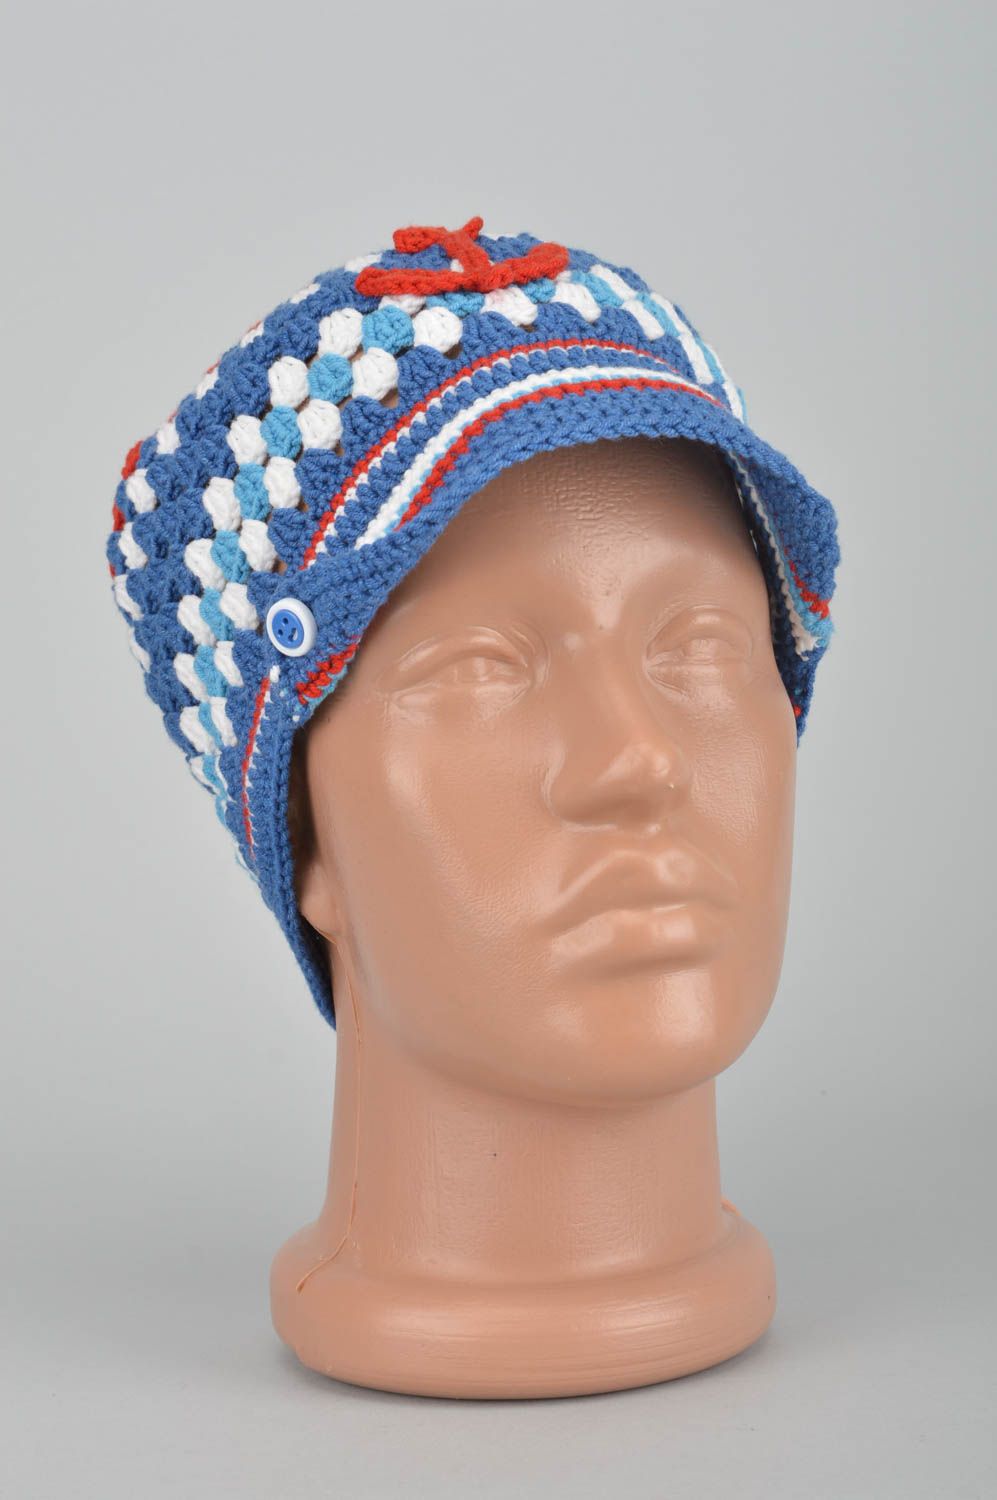 Beautiful handmade crochet hat crochet ideas gifts for him baby hat designs photo 1